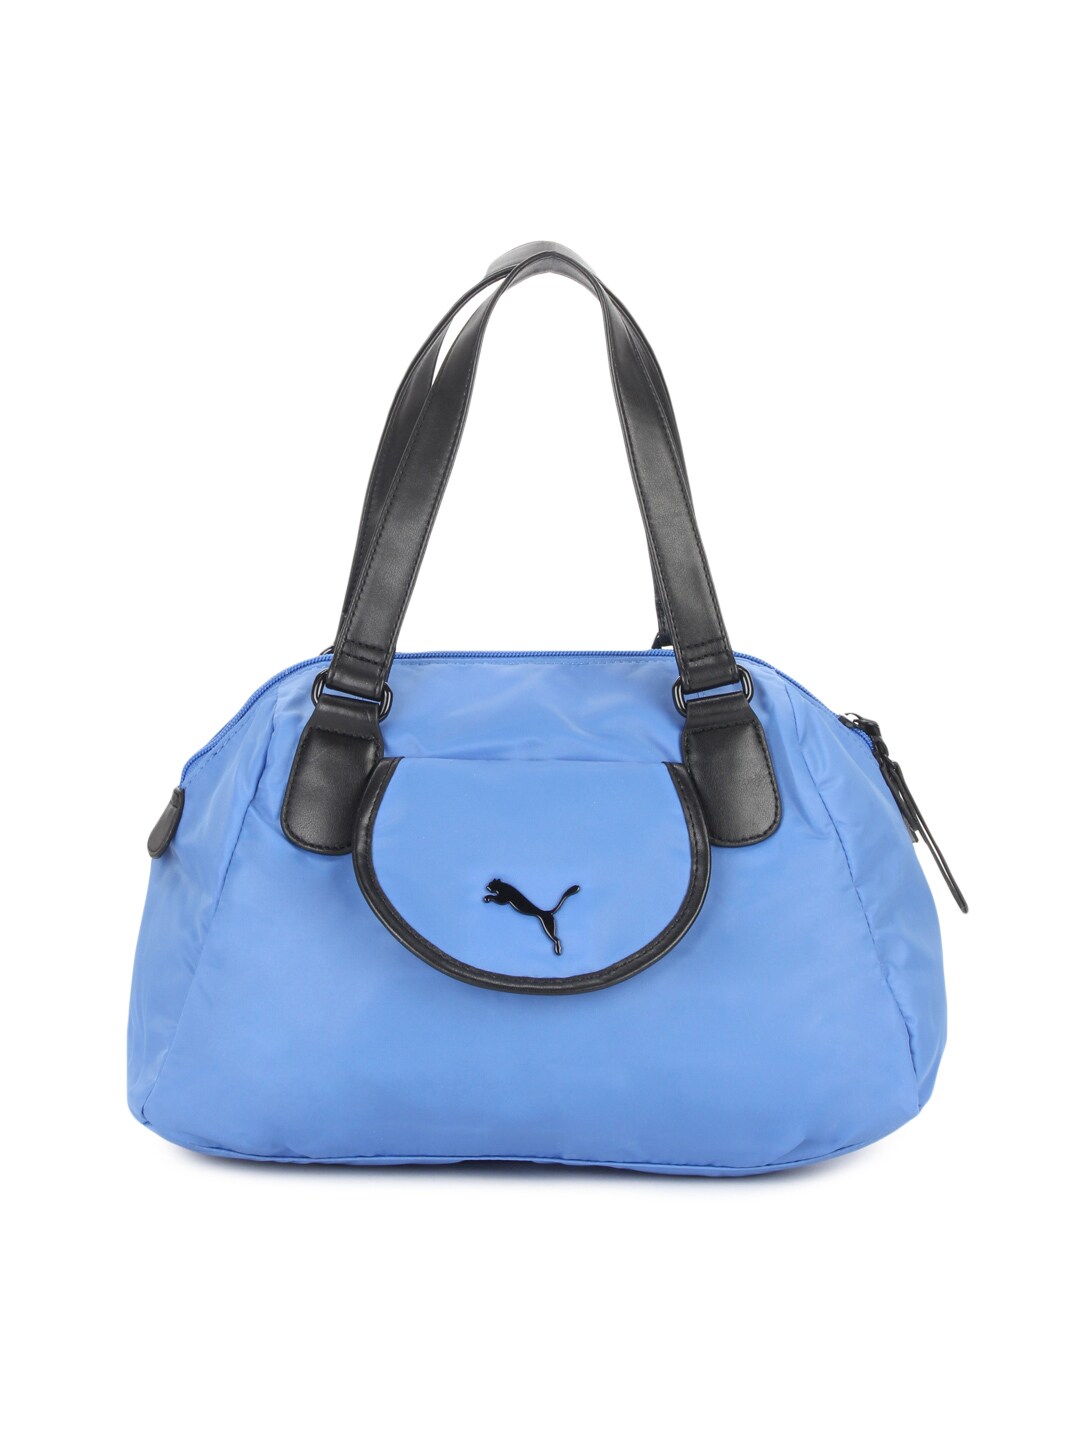 Puma Women Dazzle Blue Handbag